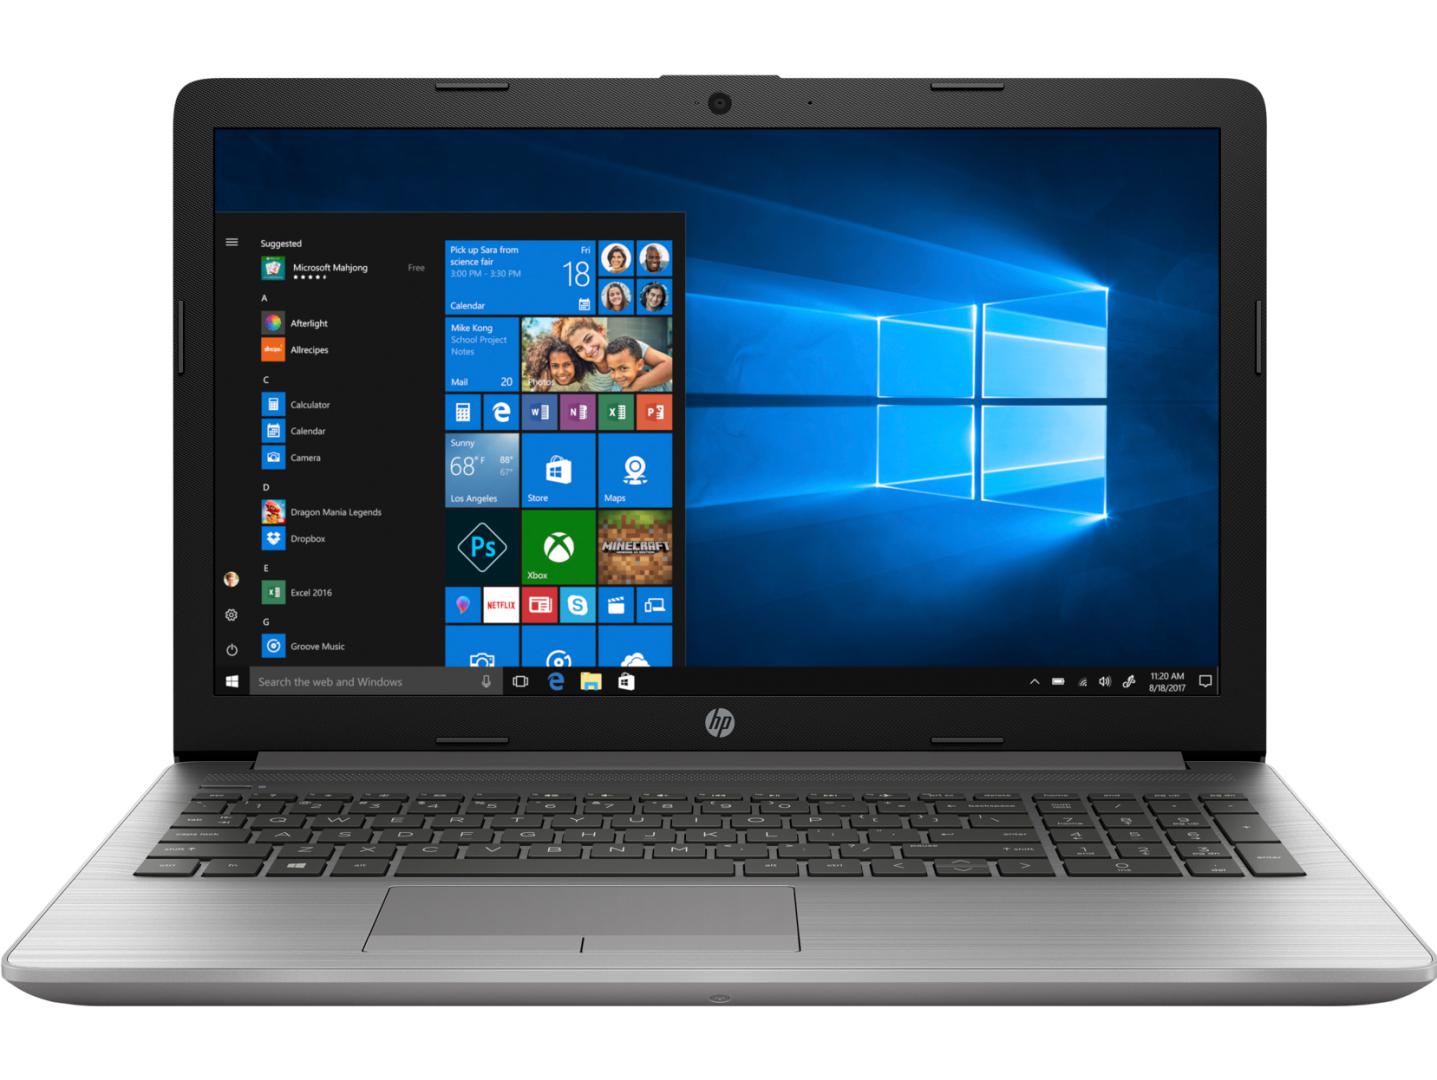 Laptop HP 250 G7, 15.6" LED FHD, Intel Core i5-8265U Quad Core, RAM 8GB DDR4, HDD 1TB, Windows 10 Pro 64bit